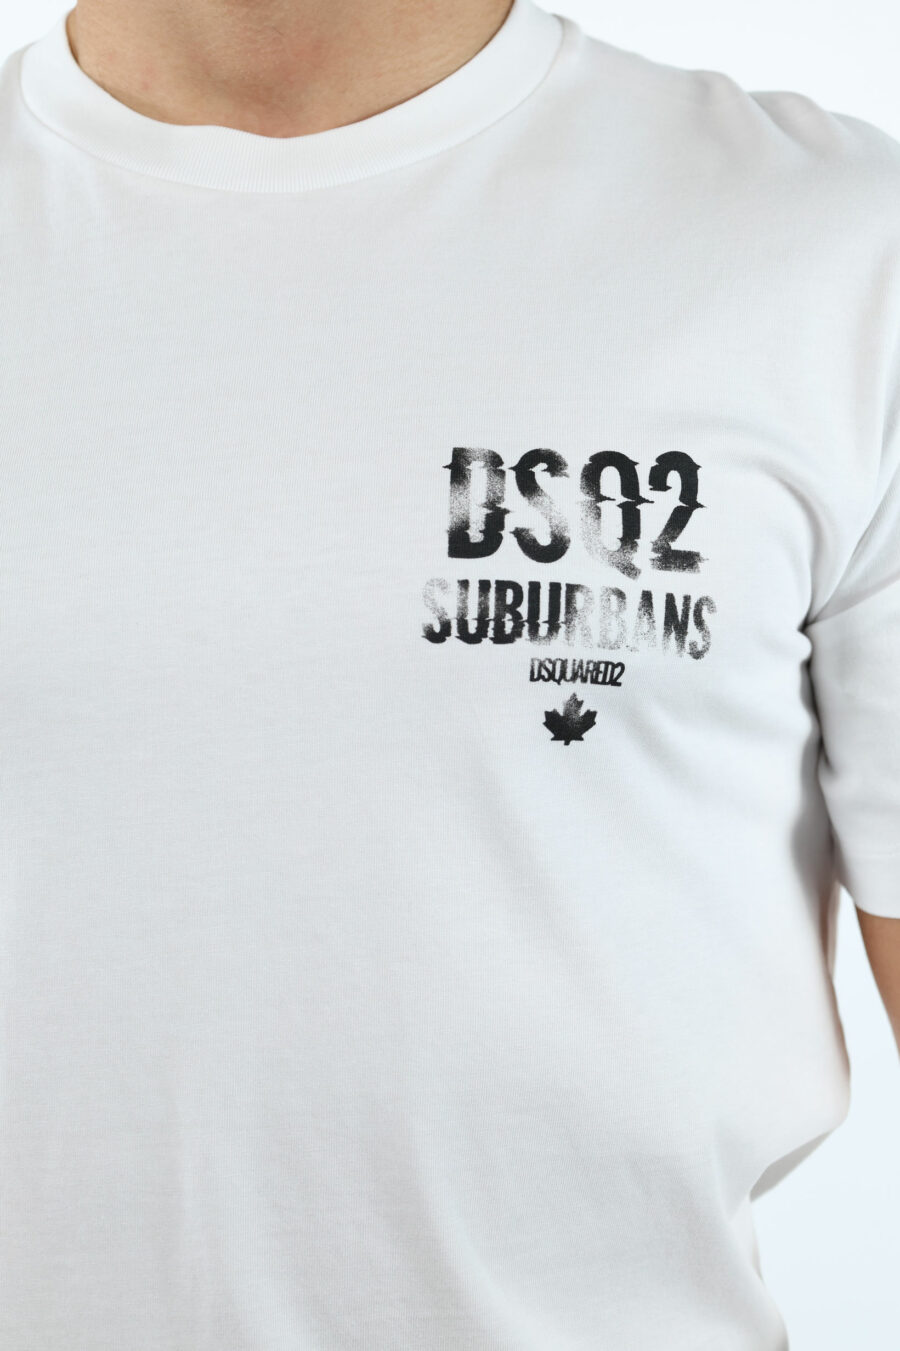 T-shirt branca com minilogo "suburbans" preto - 106624